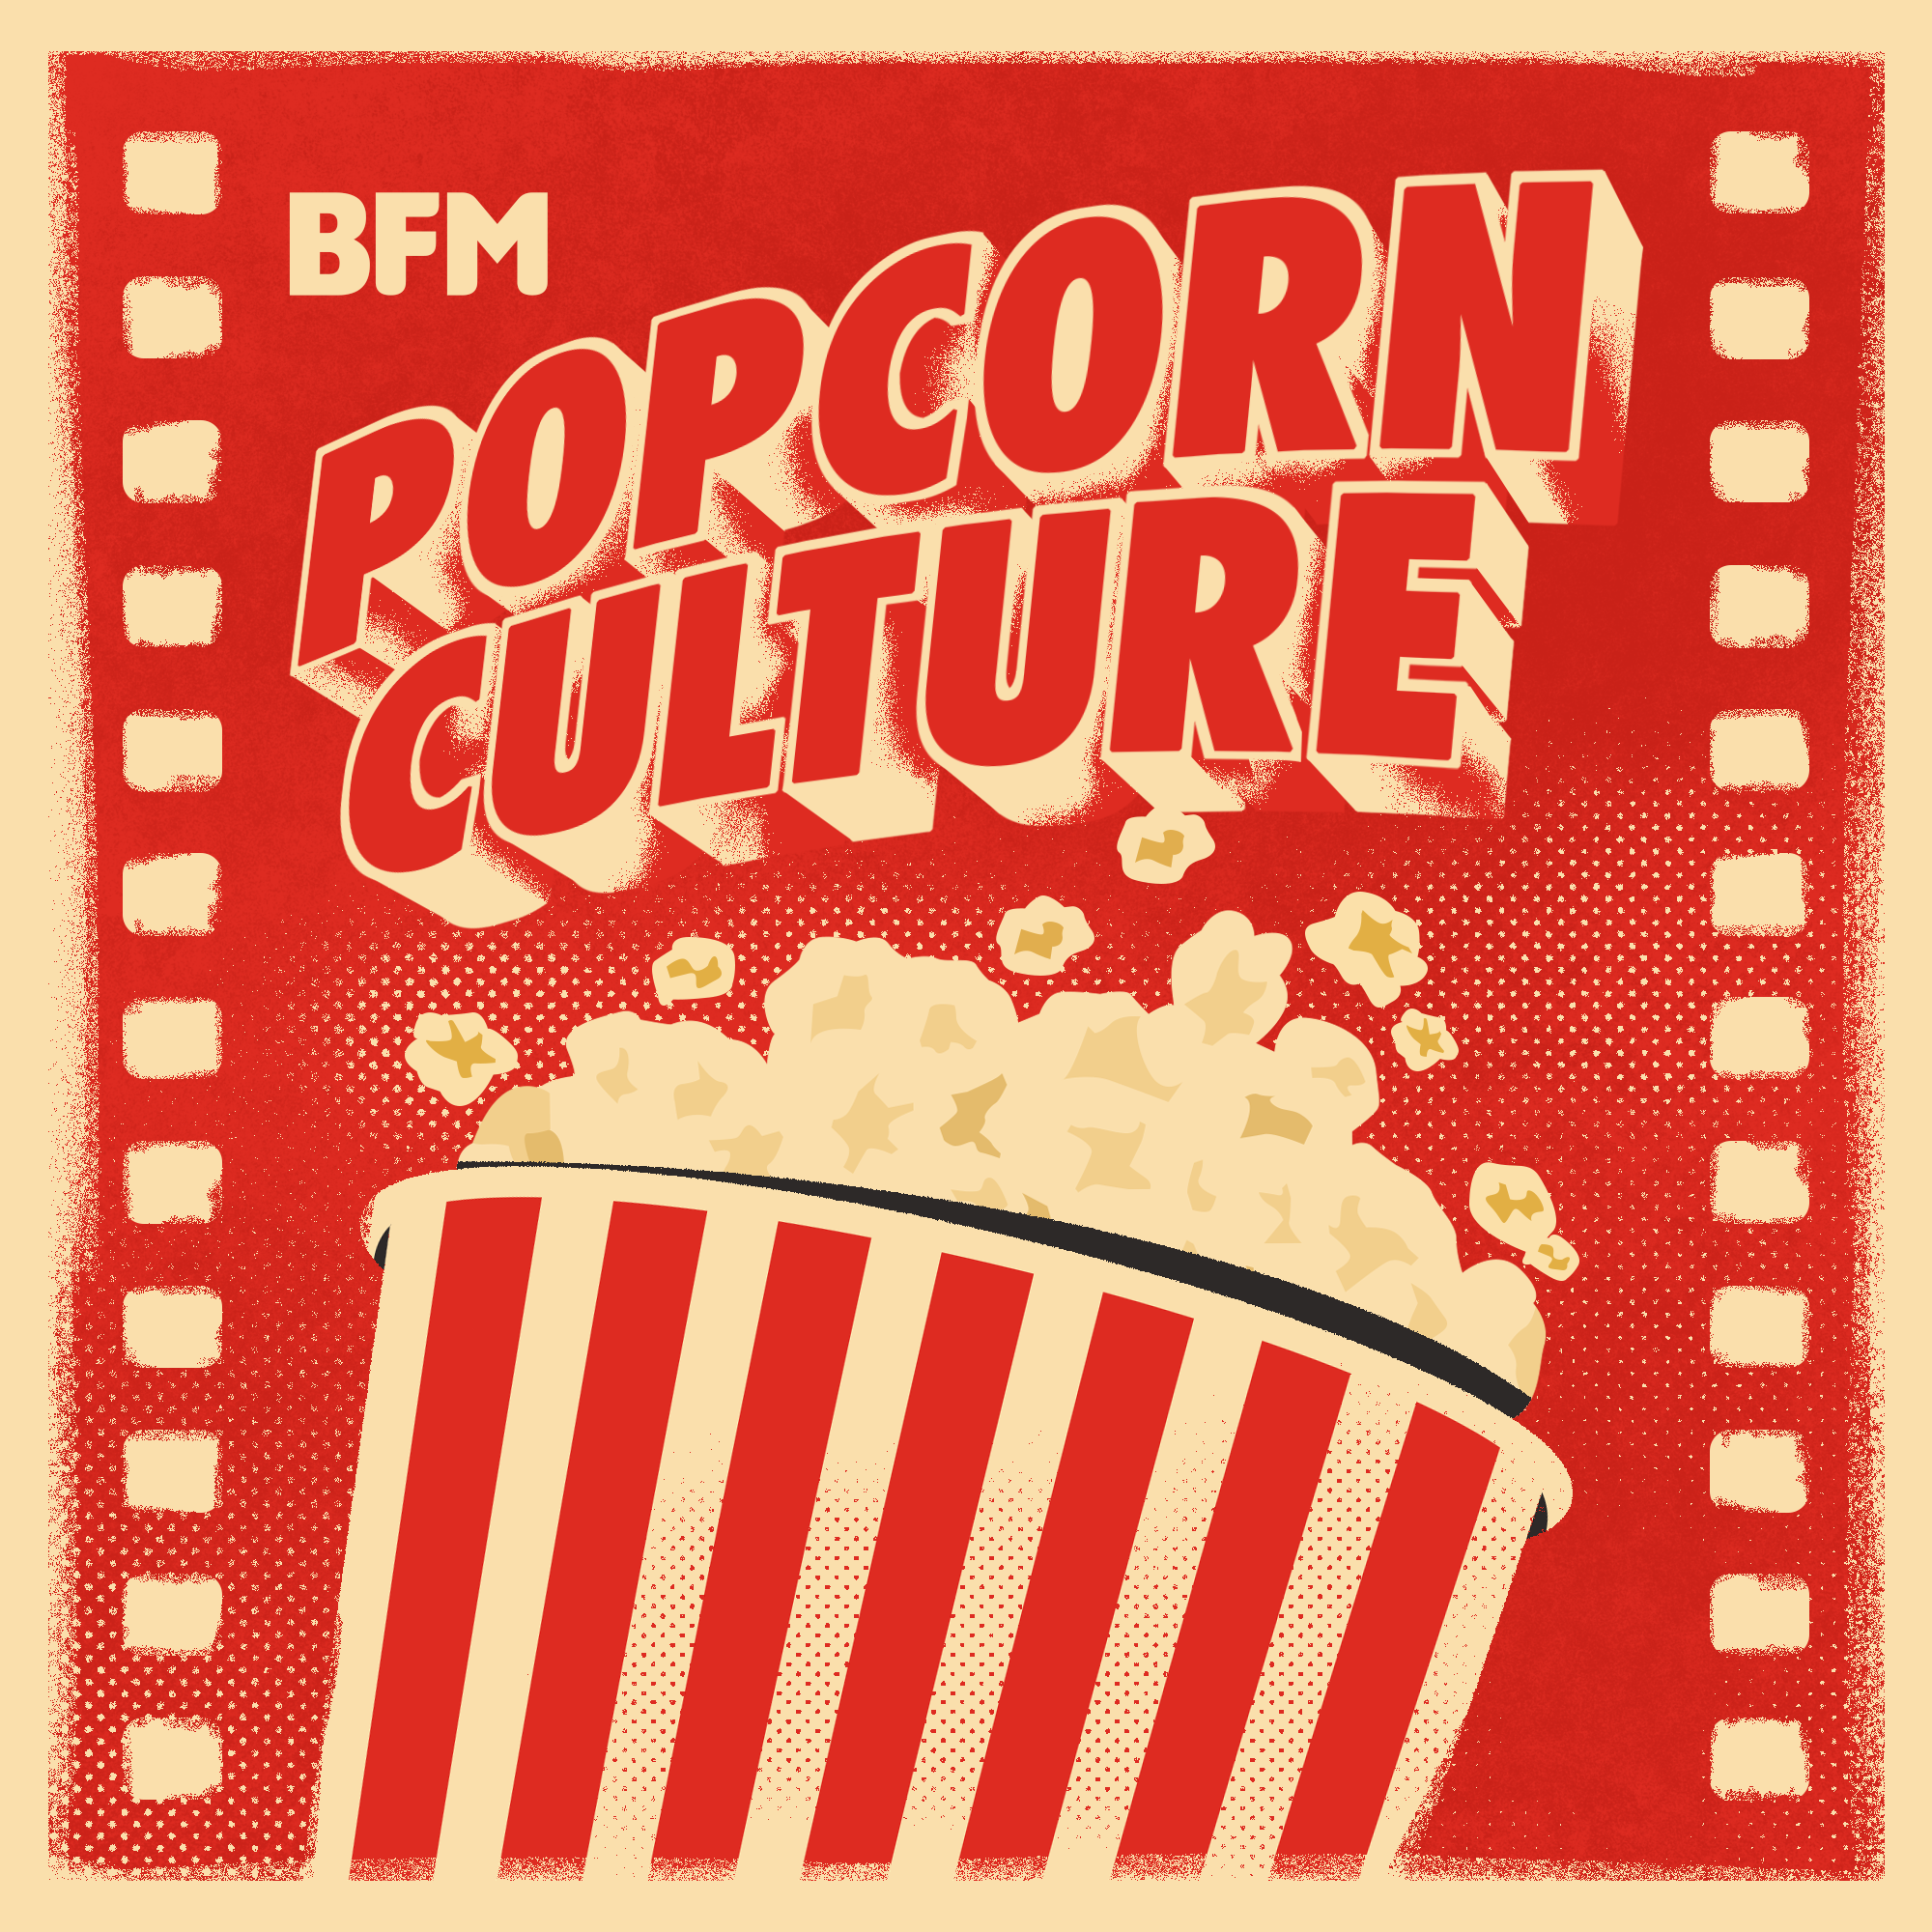 Popcorn Culture - Supercut: Boring Movies